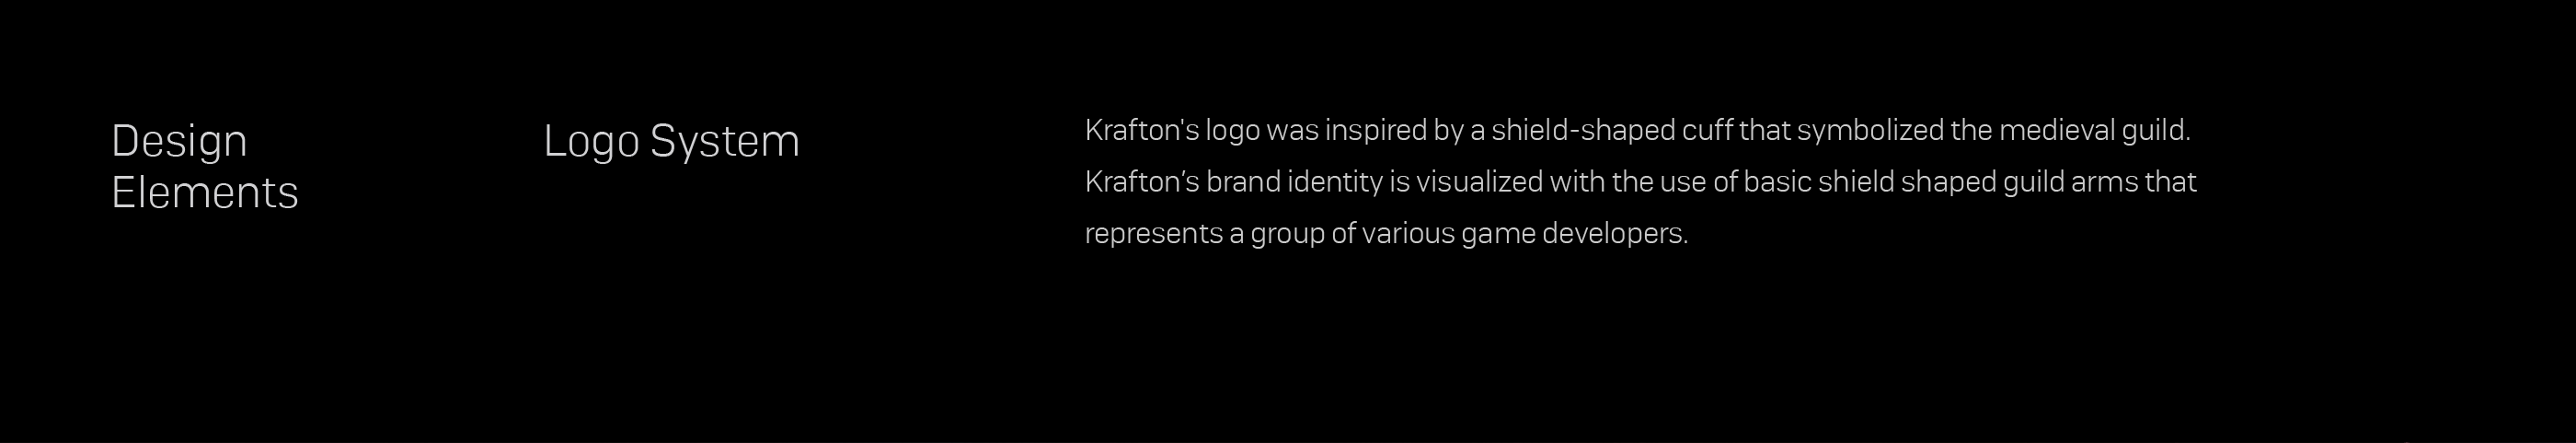 Krafton game union Brand eXperience Design renewalb5b73688492253.5dd79cfb77d16.png